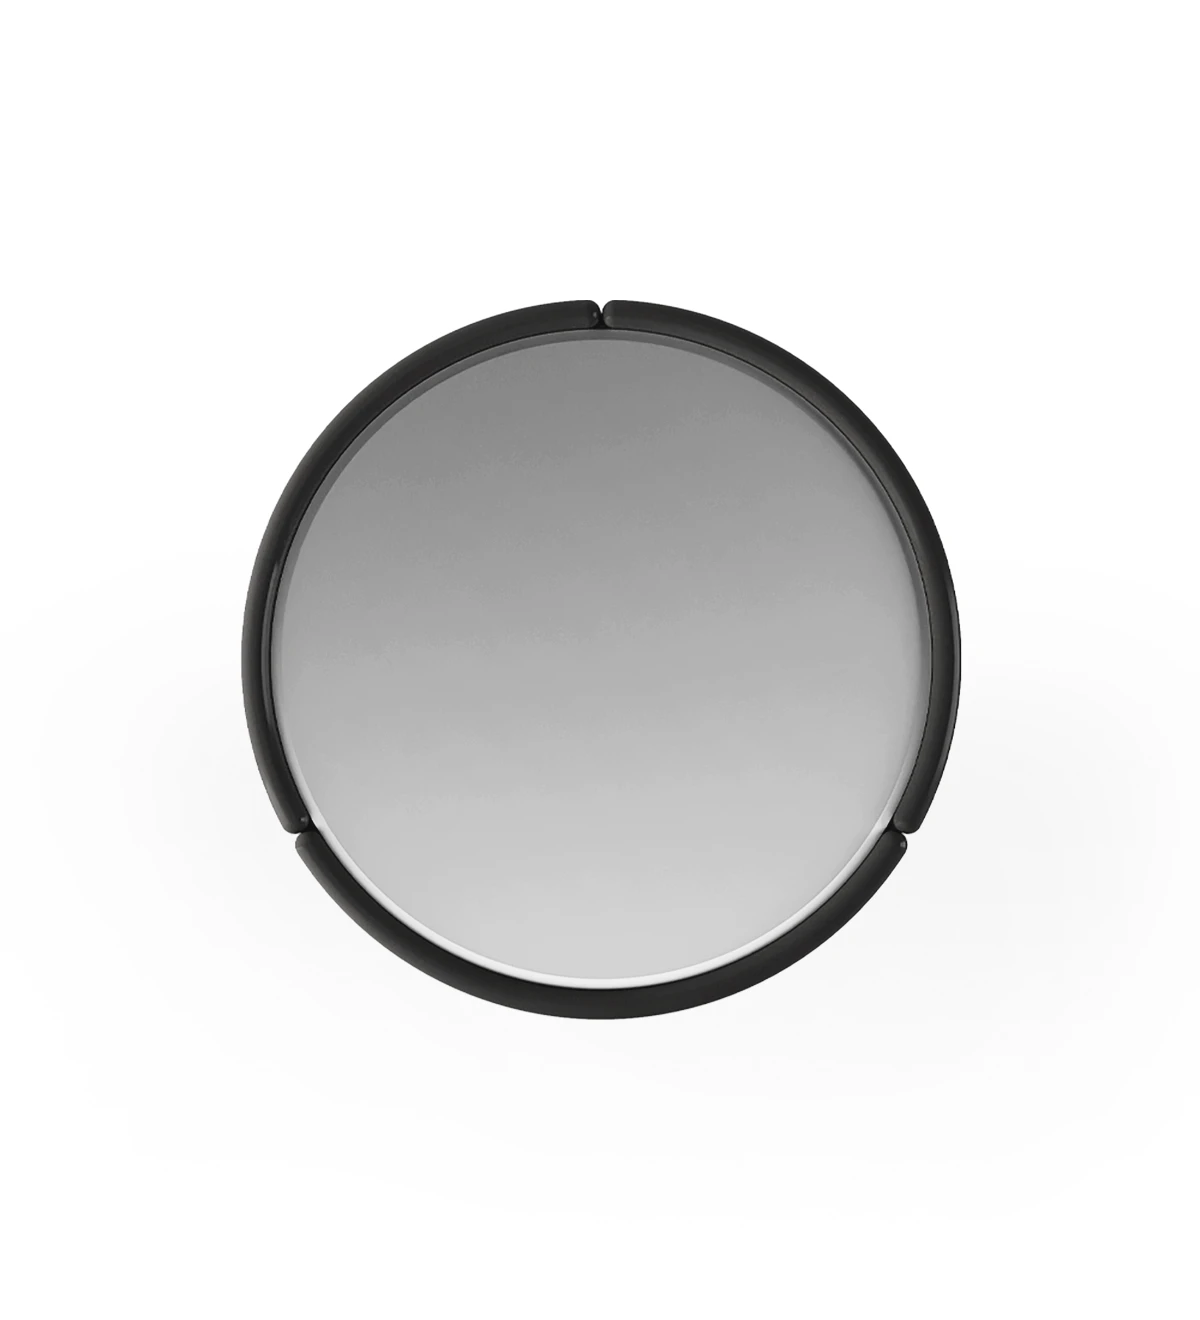 Black lacquered round mirror